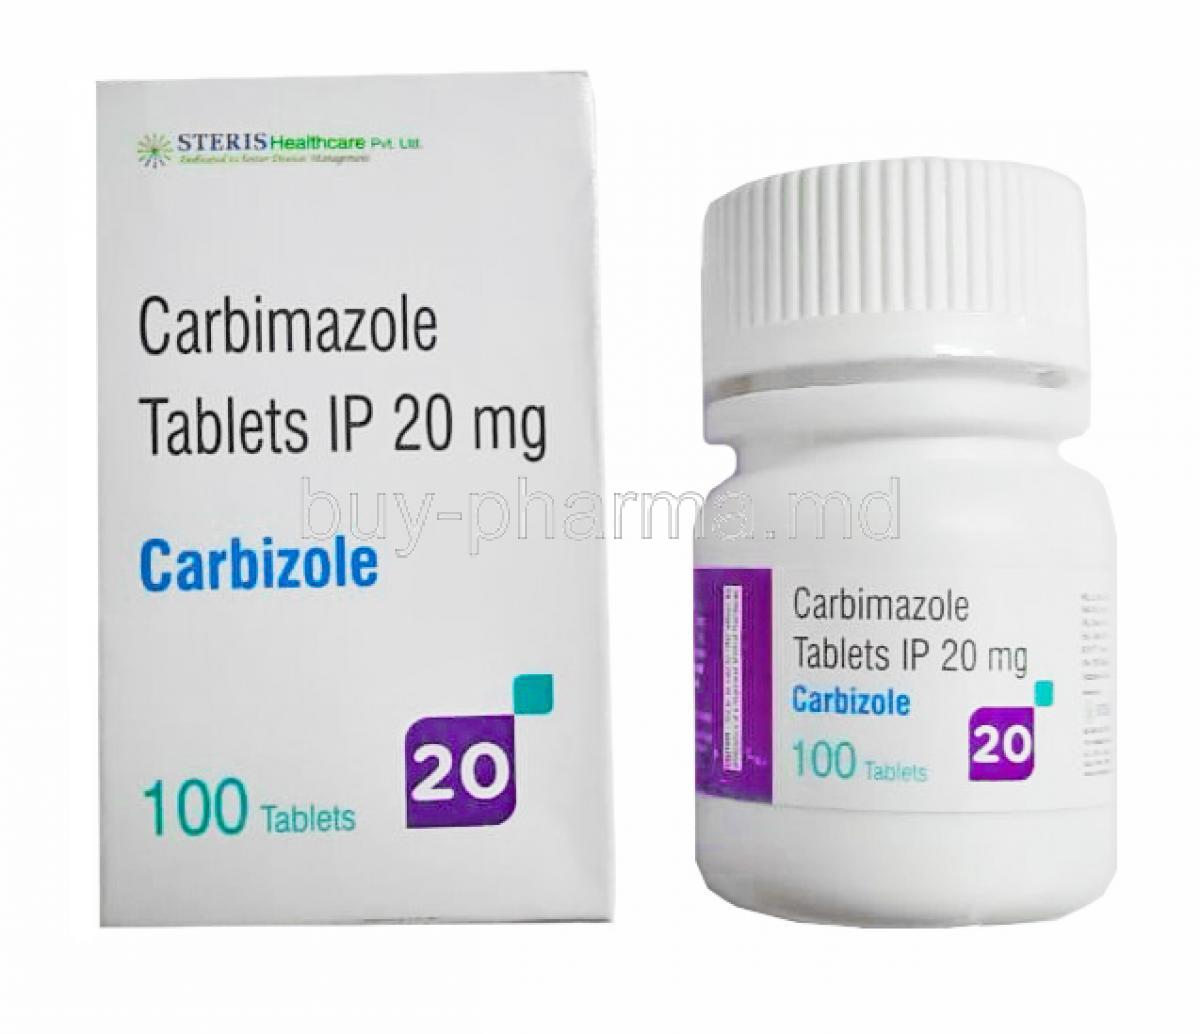 Carbizole, Carbimazole 20mg box and bottle